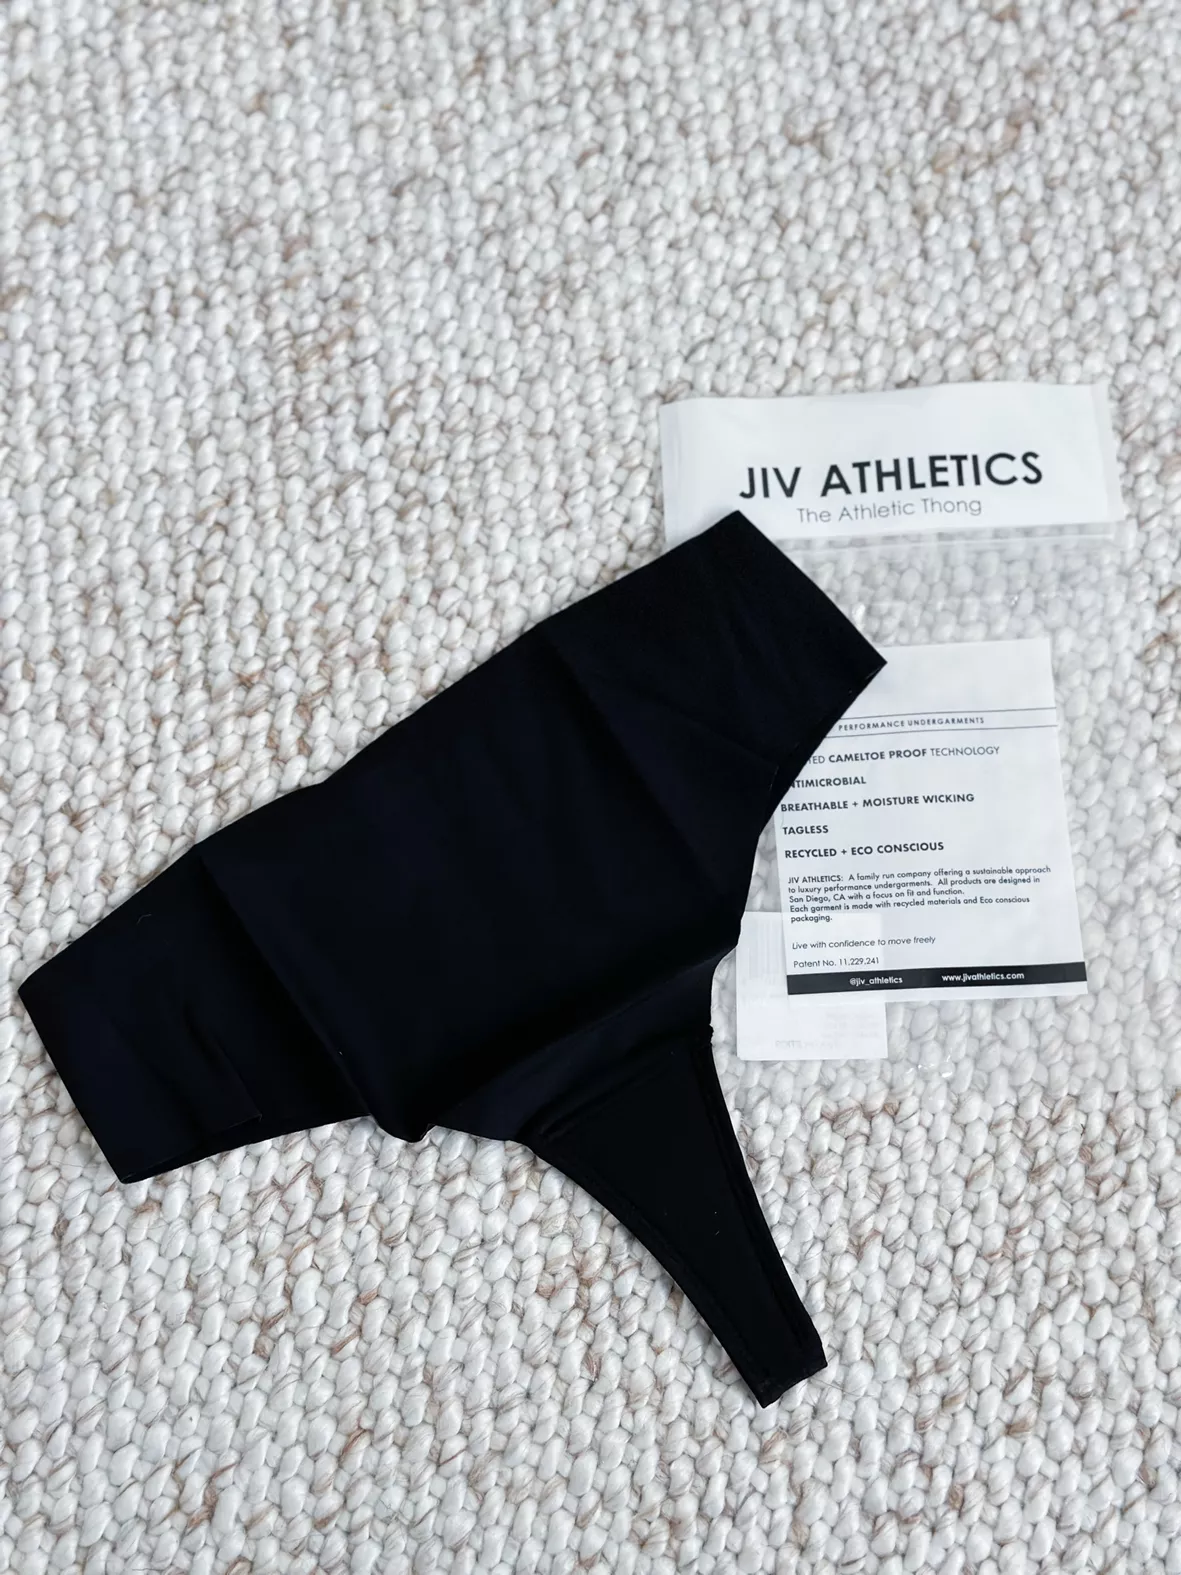 JIV Athletics Cameltoe Proof Thong, Women's Fashion, New